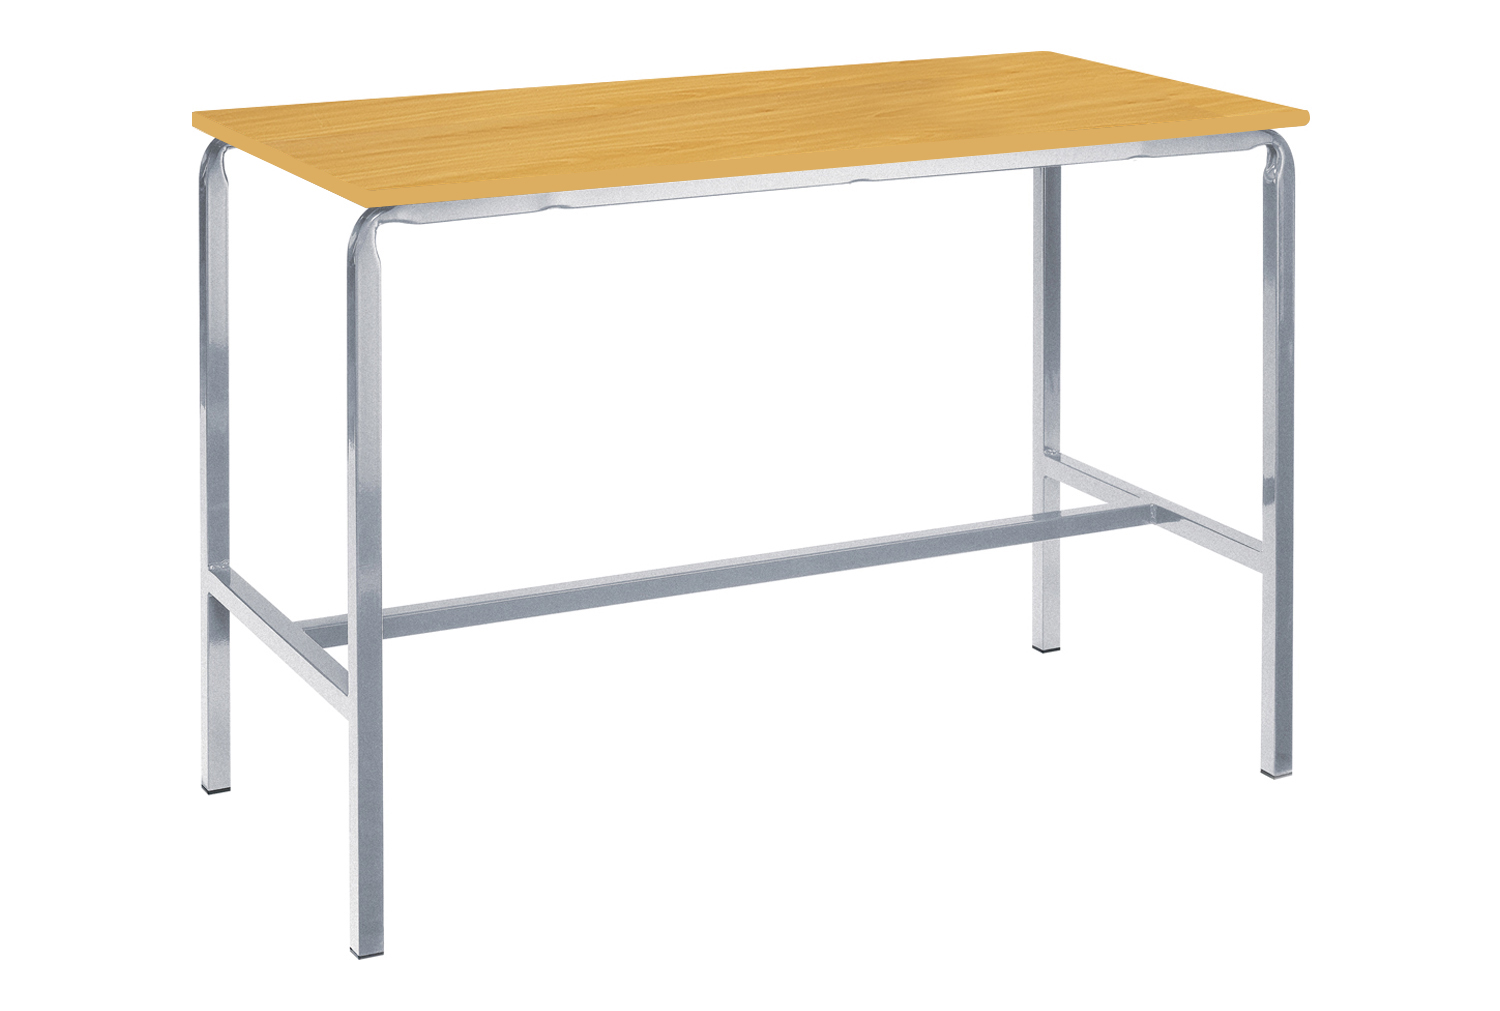 Qty 2 - Crush Bent Craft Tables (MDF Edge), 120wx60dx90h (cm), Black Frame, Grey